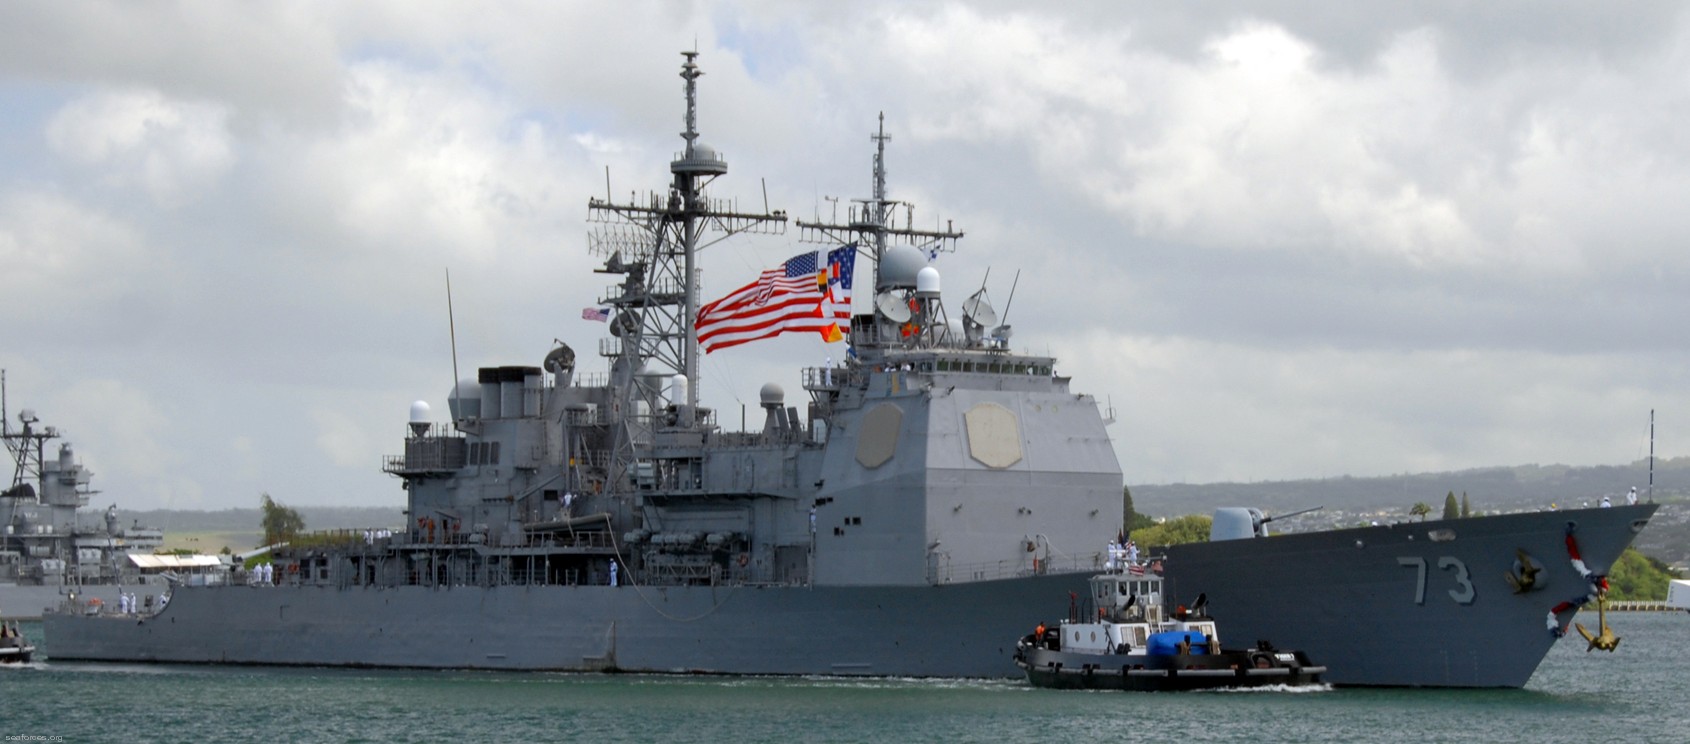 cg-73 uss port royal ticonderoga class guided missile cruiser navy 30 pearl harbor